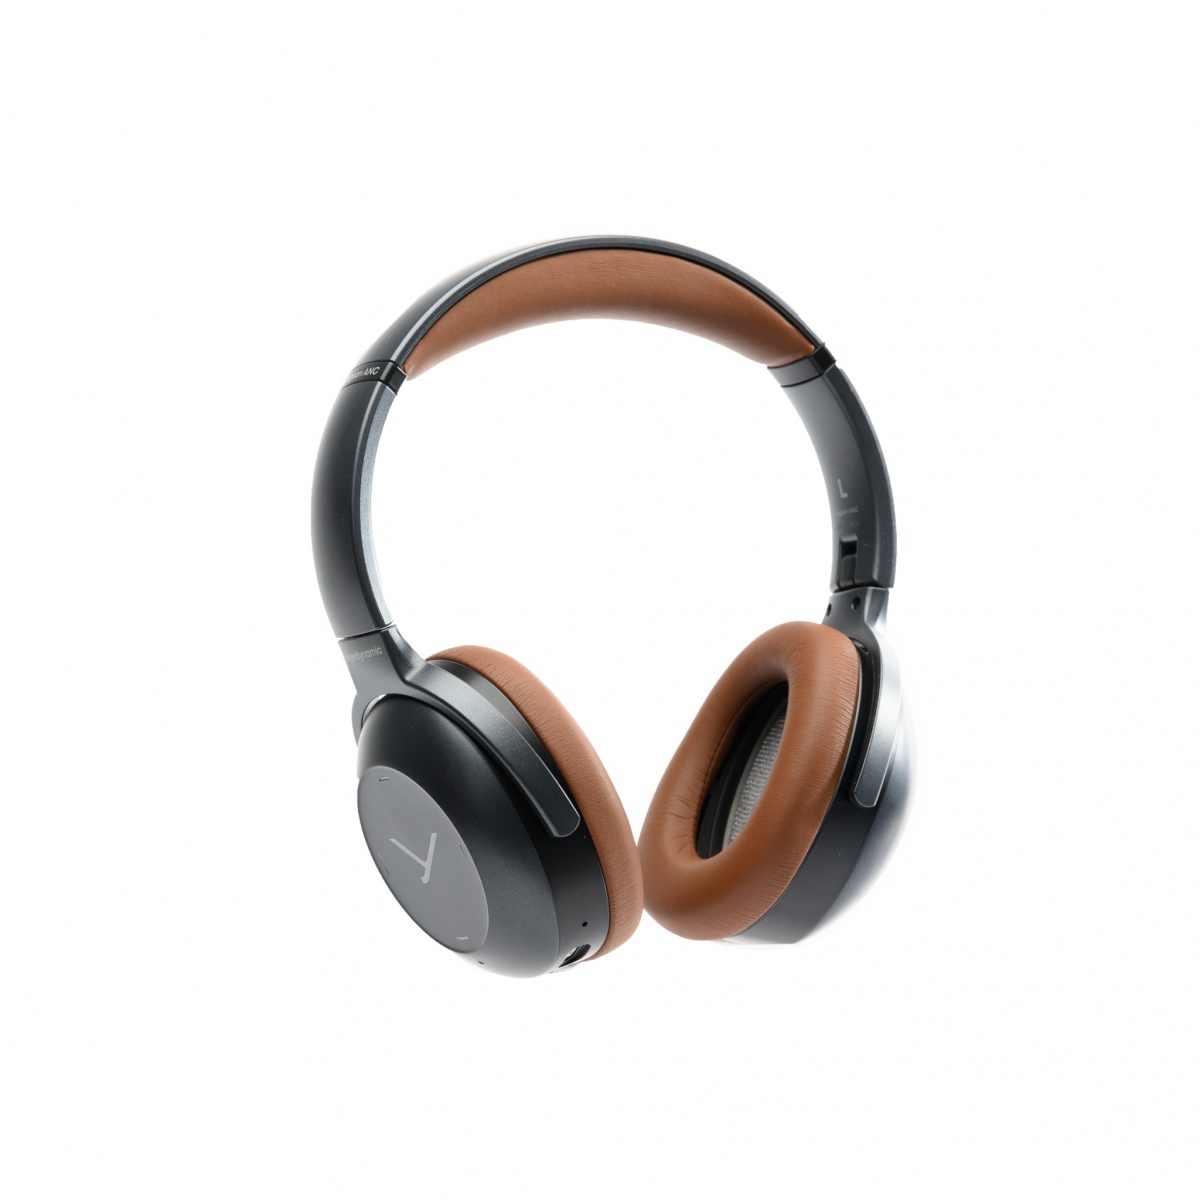 beyerdynamic lagoon anc wireless headphone review